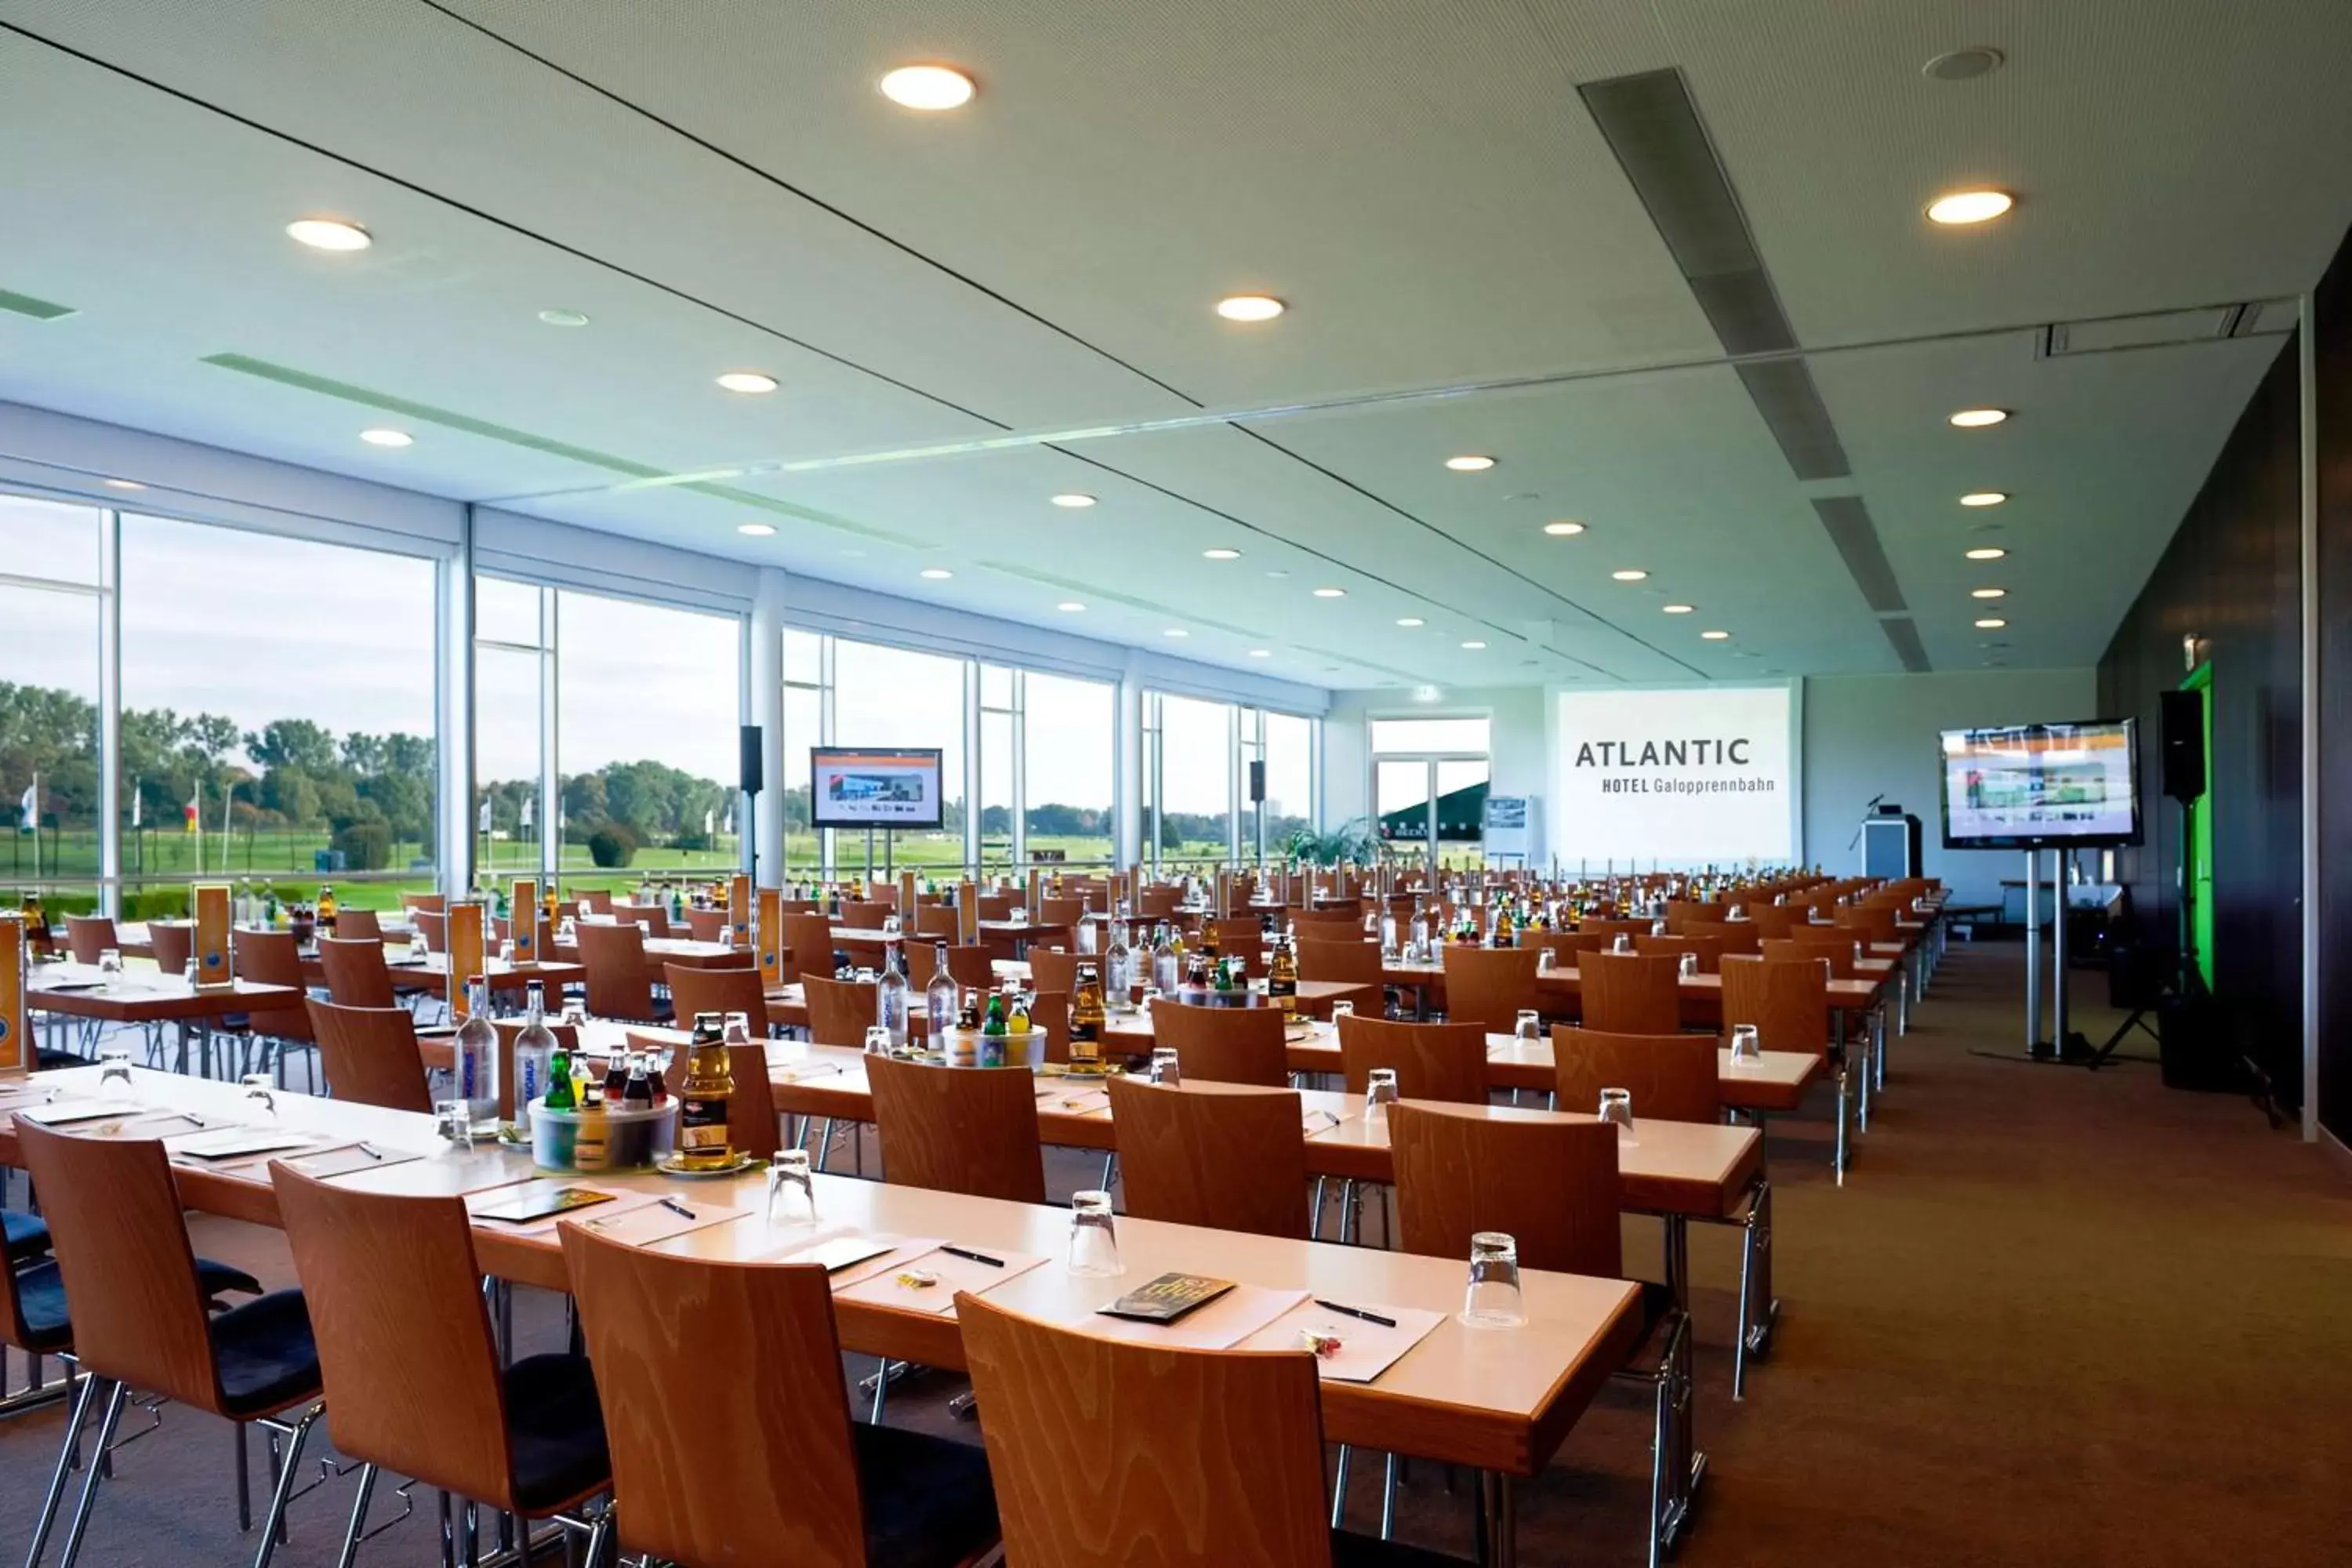 On site, Restaurant/Places to Eat in Atlantic Hotel Galopprennbahn